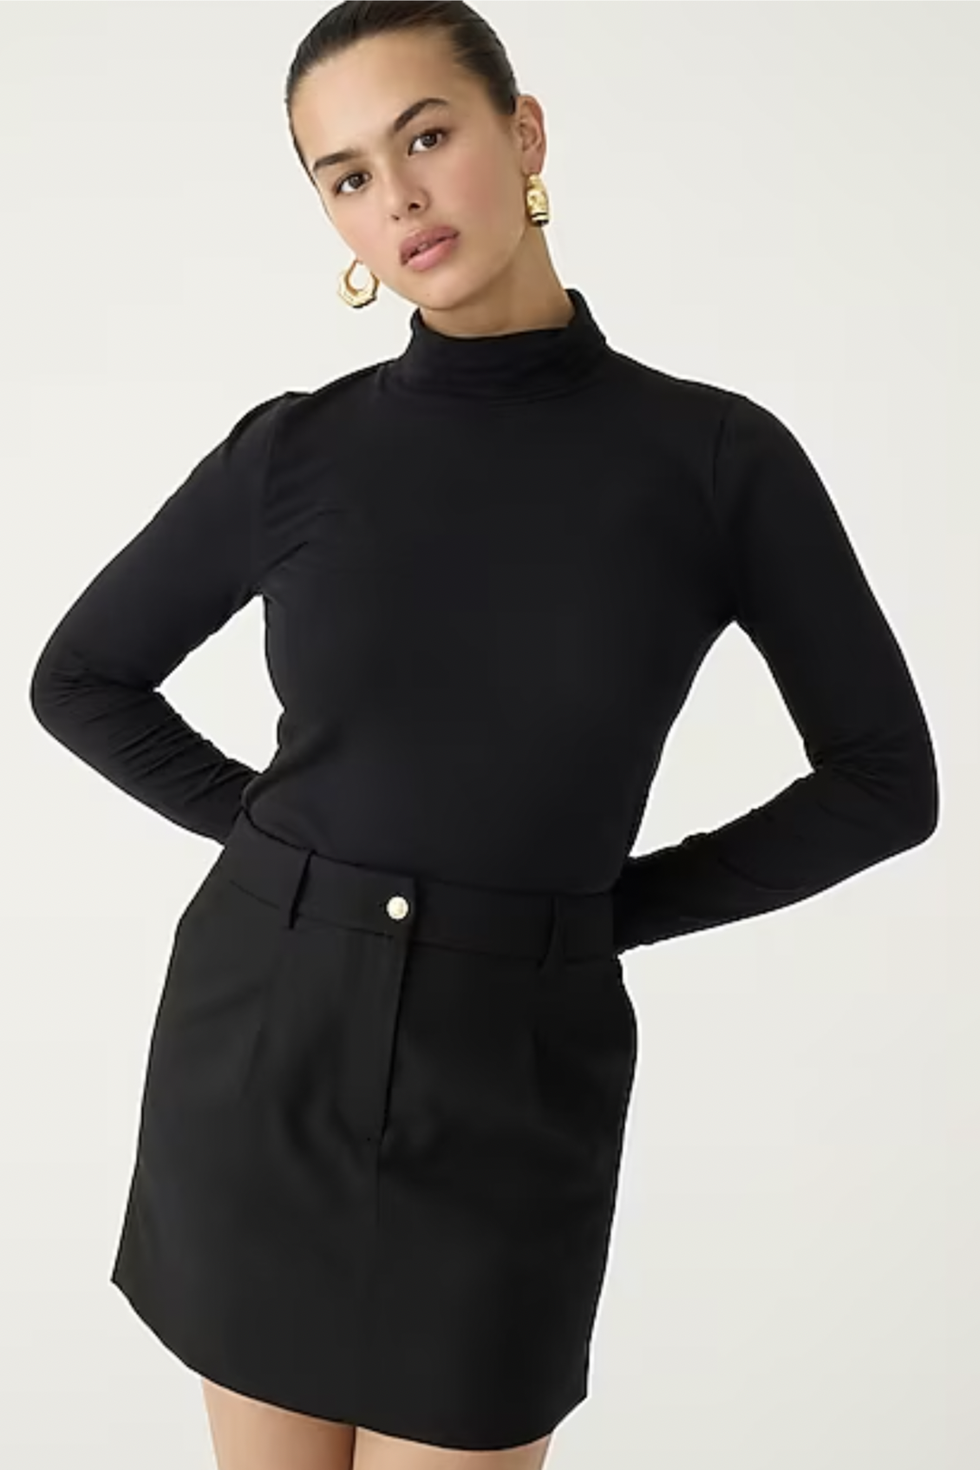 Black Turtleneck Bodysuit - A Wardrobe Staple - Straight A Style  Black  turtleneck outfit, Turtleneck bodysuit outfit, Black turtleneck